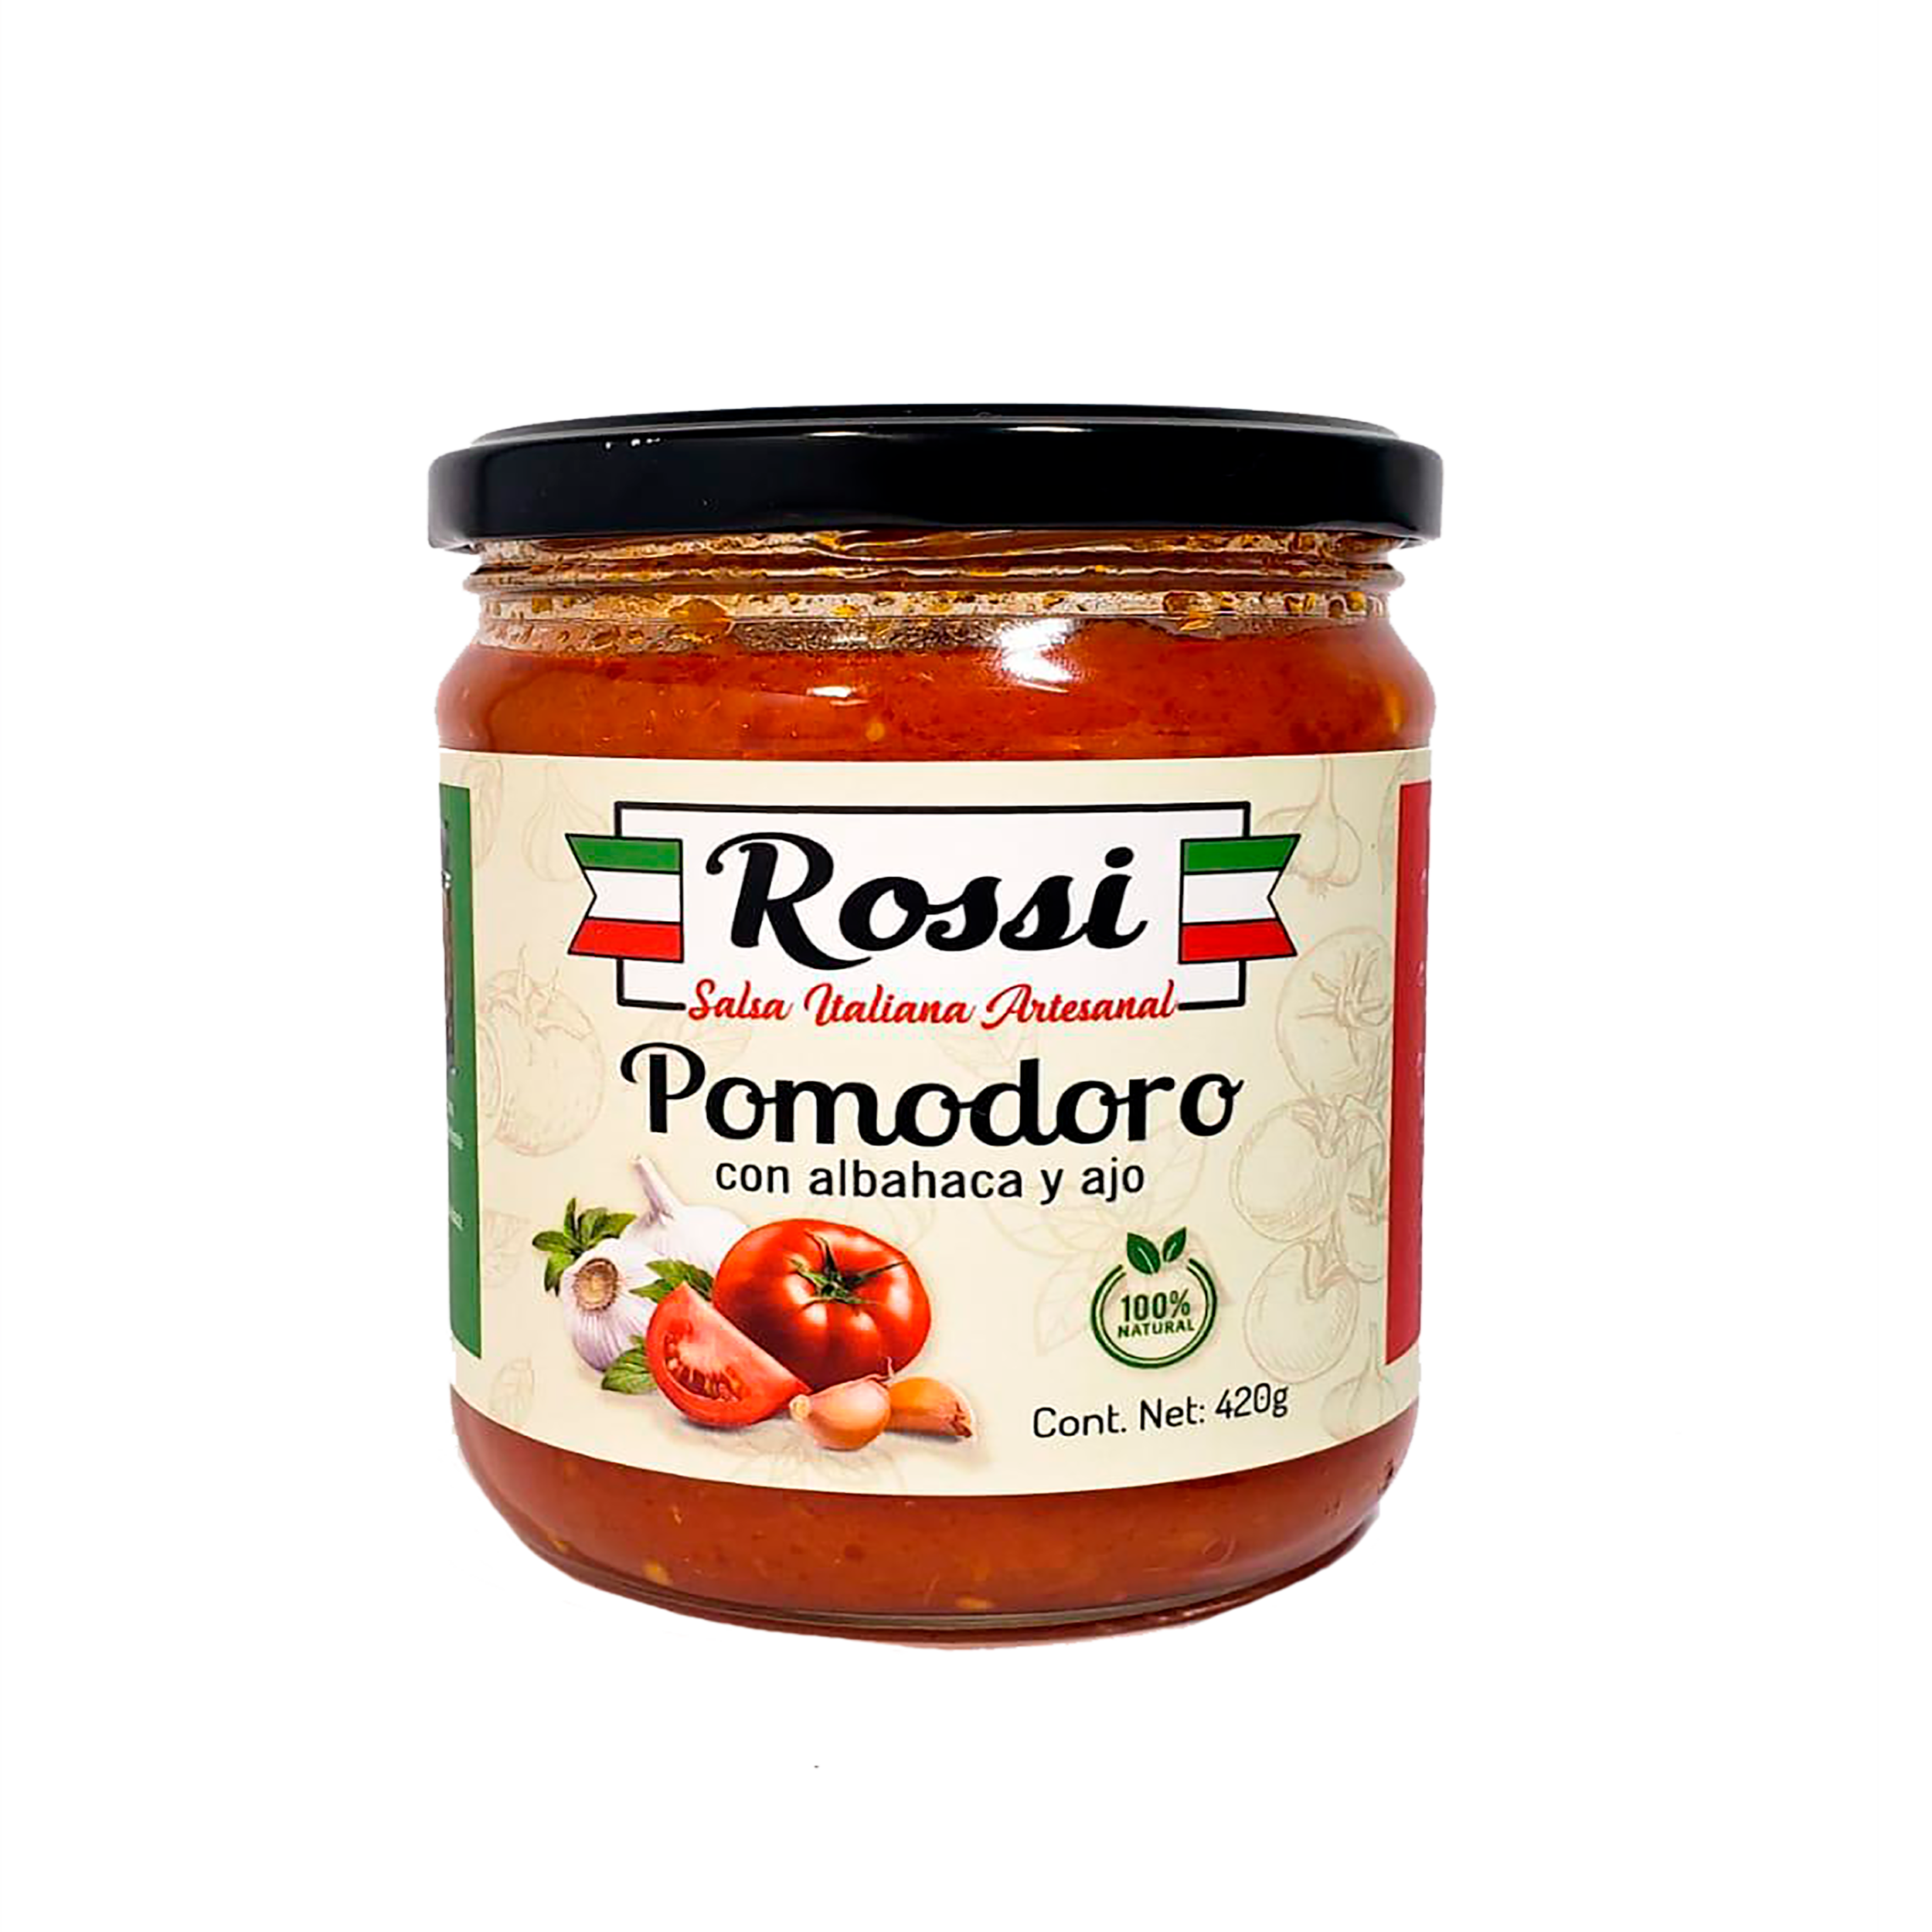 Rossi -Salsa italiana artesanal pomodoro 420G